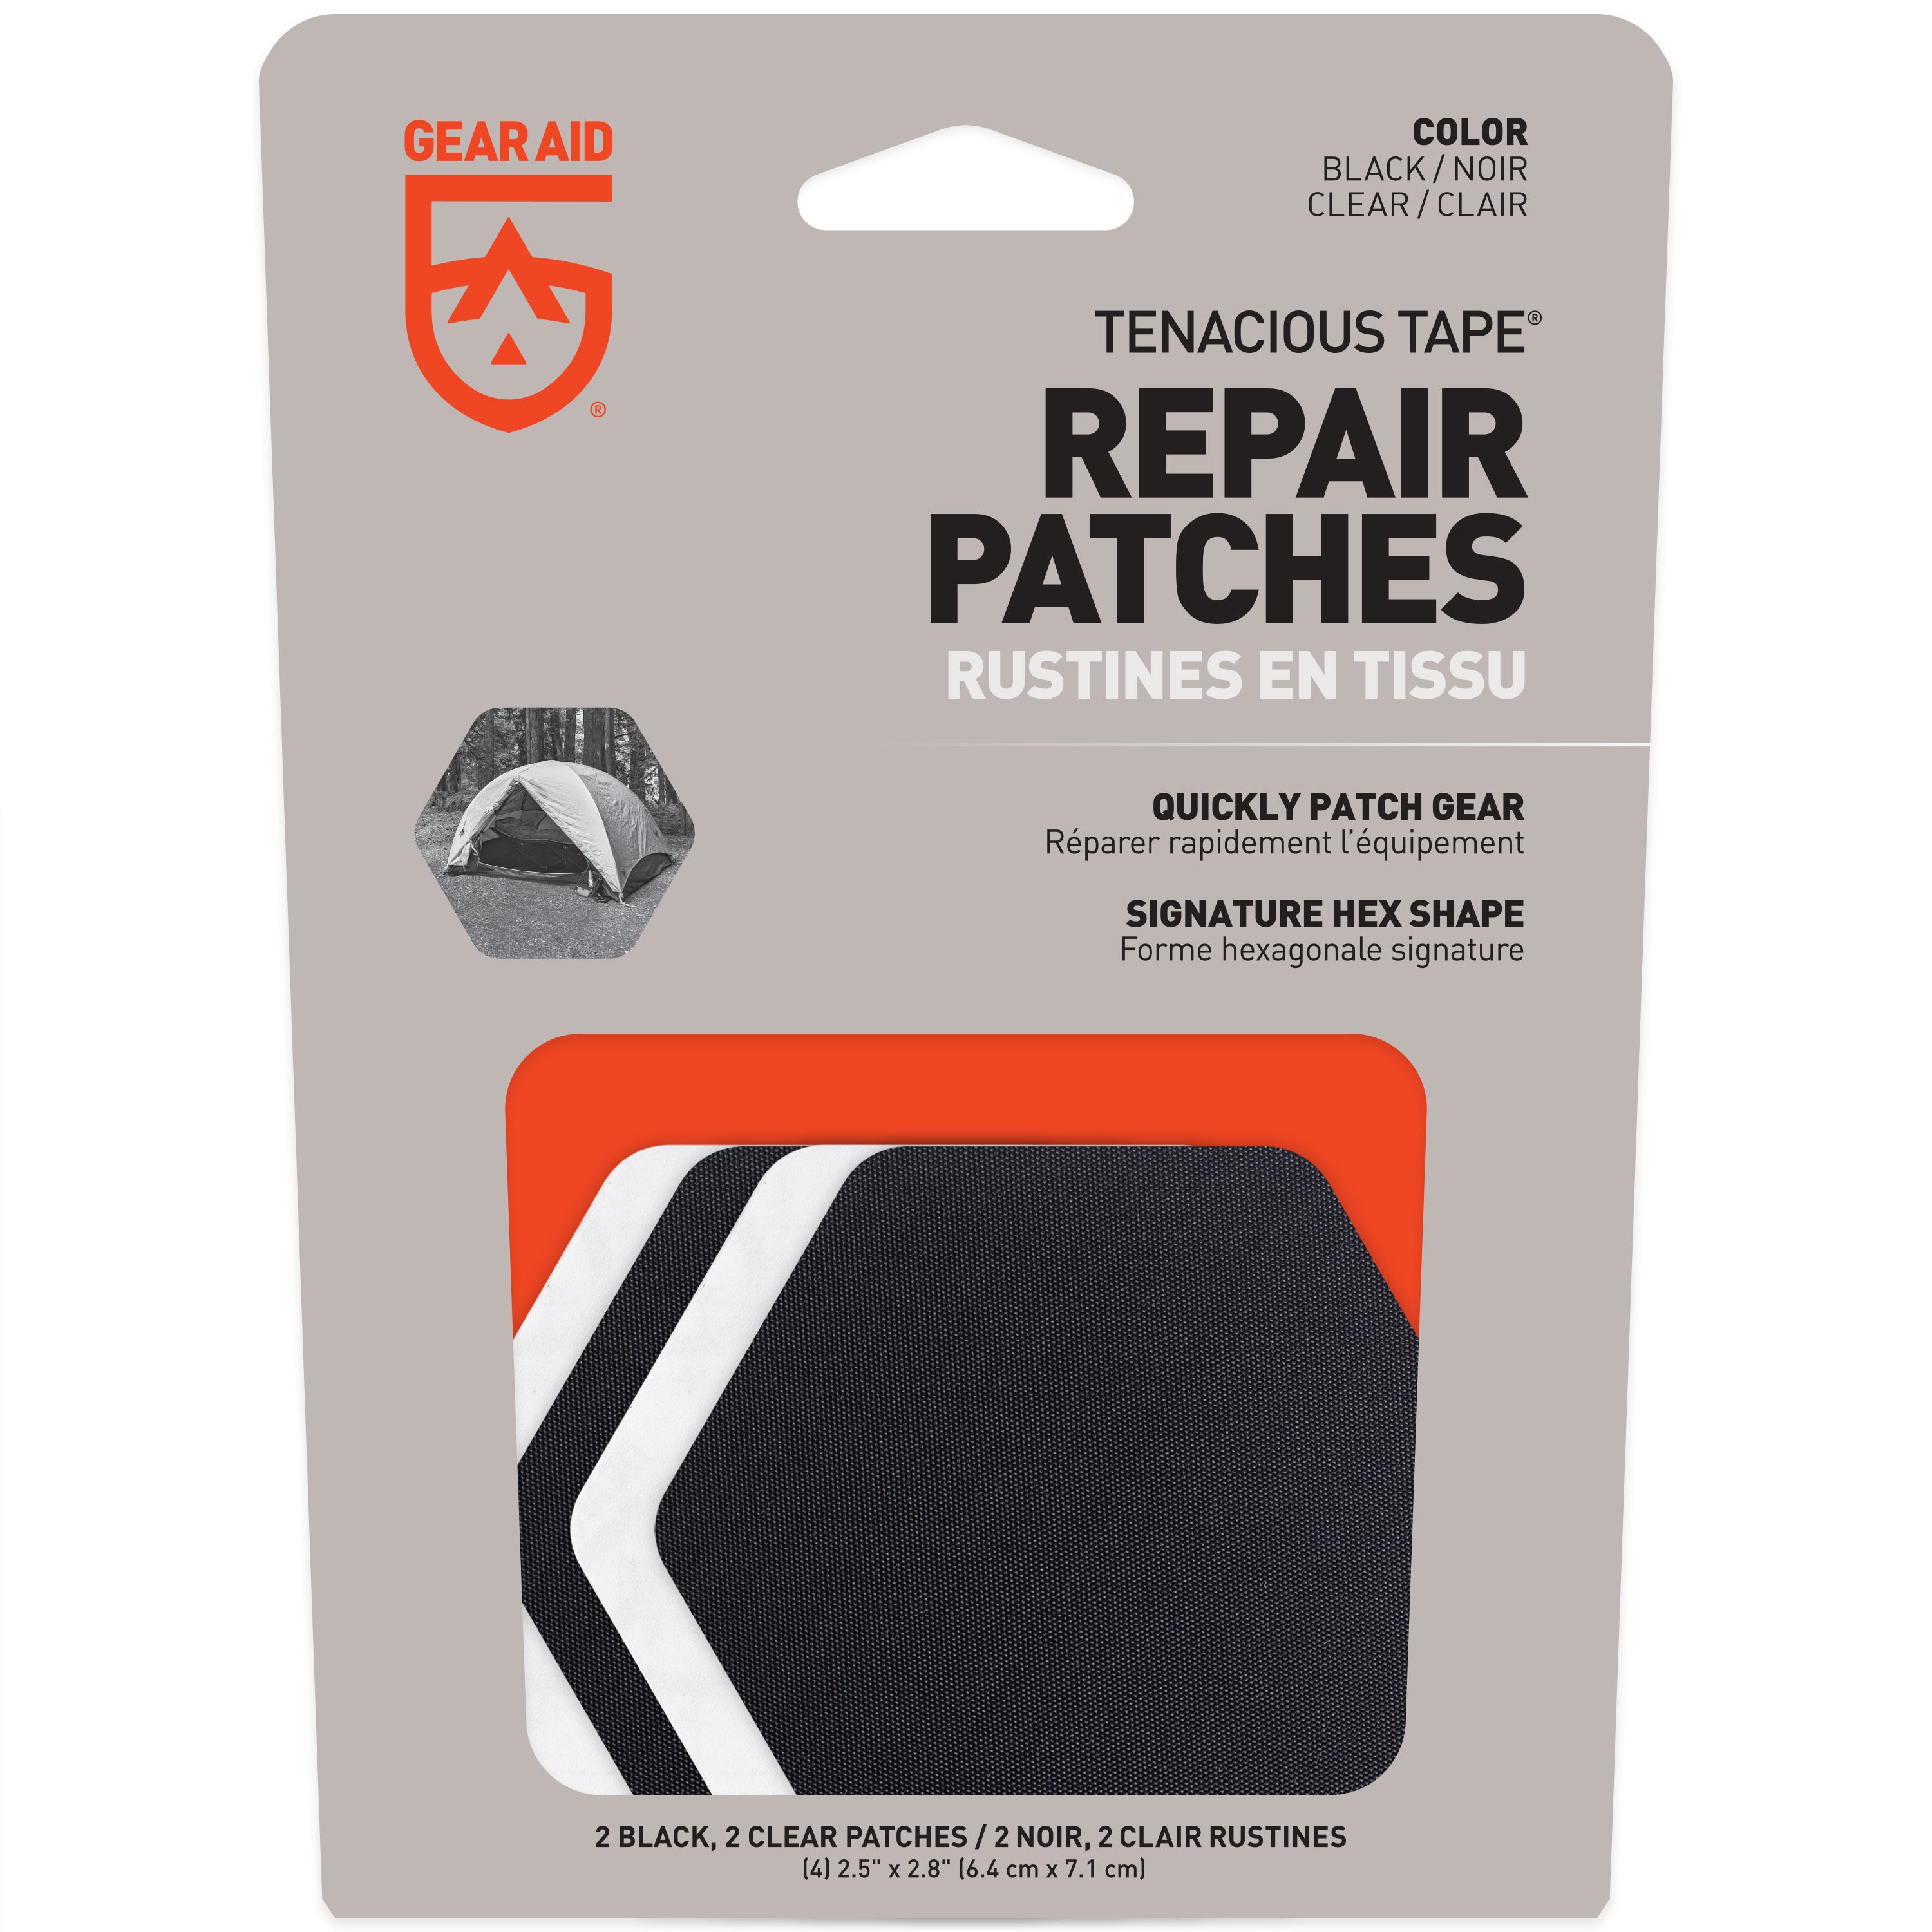 Tenacious Tape Silnylon Patch – LightHeart Gear